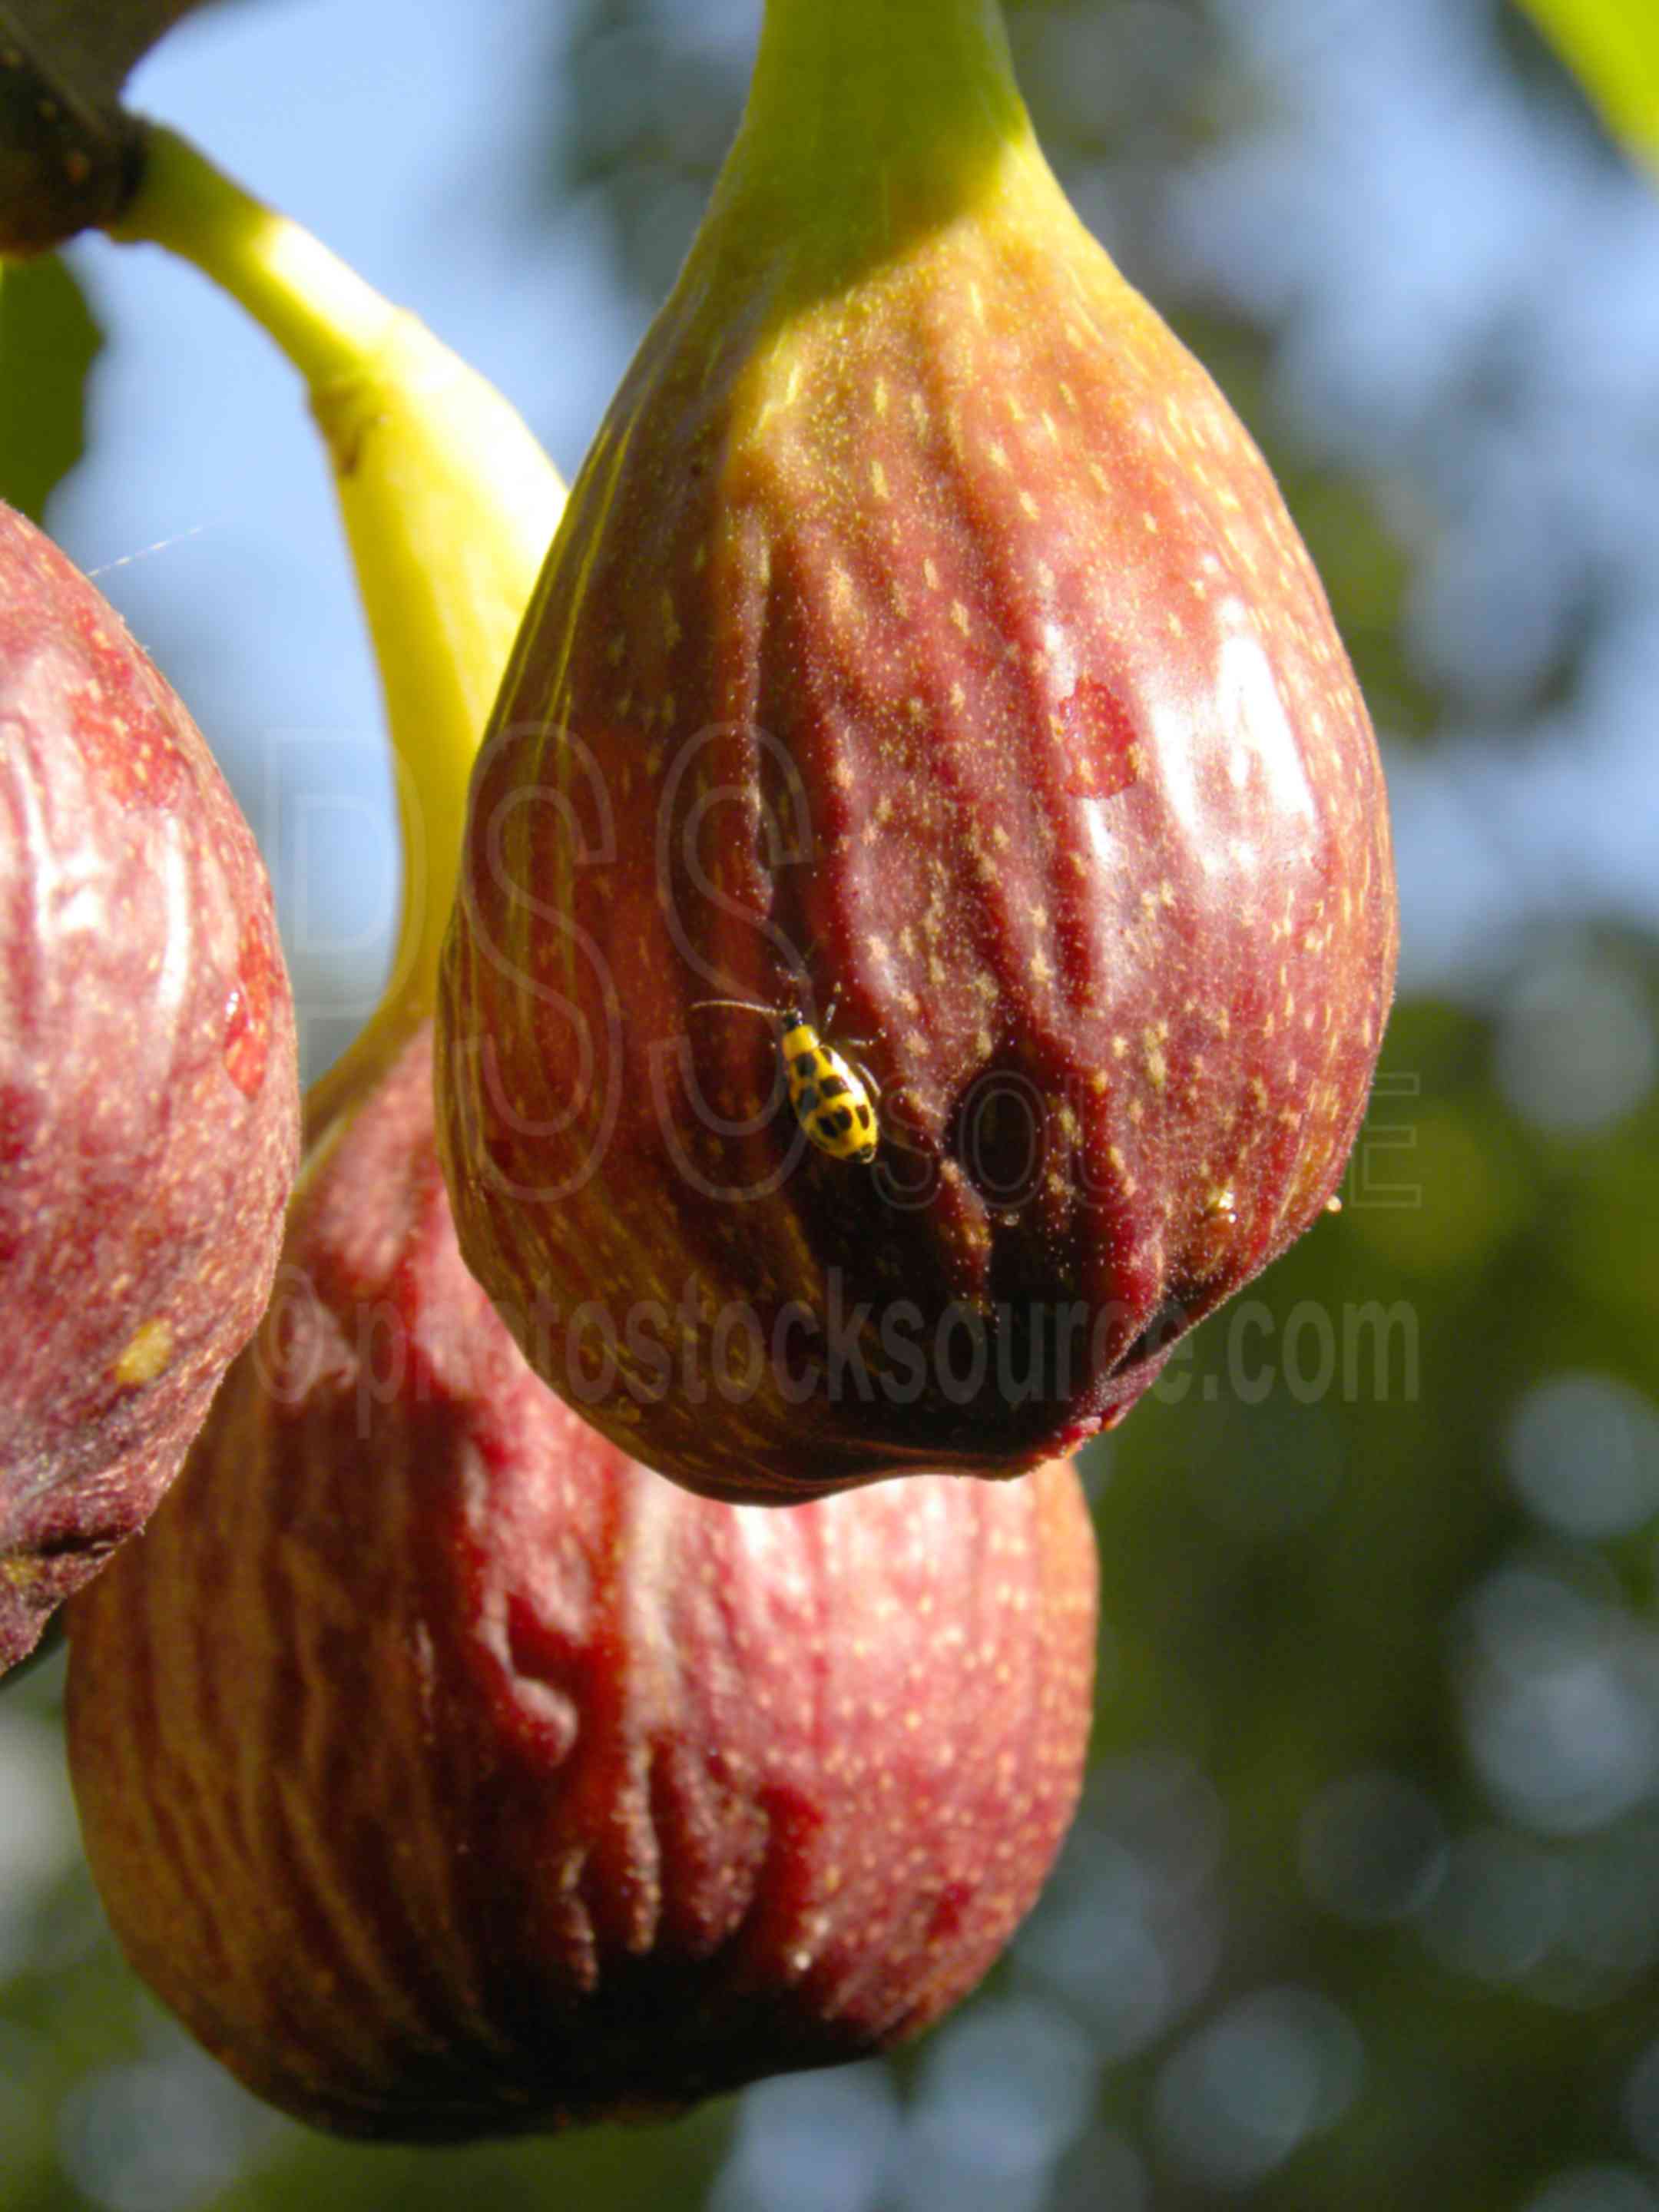 Brown Turkey Figs,fig,fruit,ripe,harvest,sunshine,bug,lady bug,plants